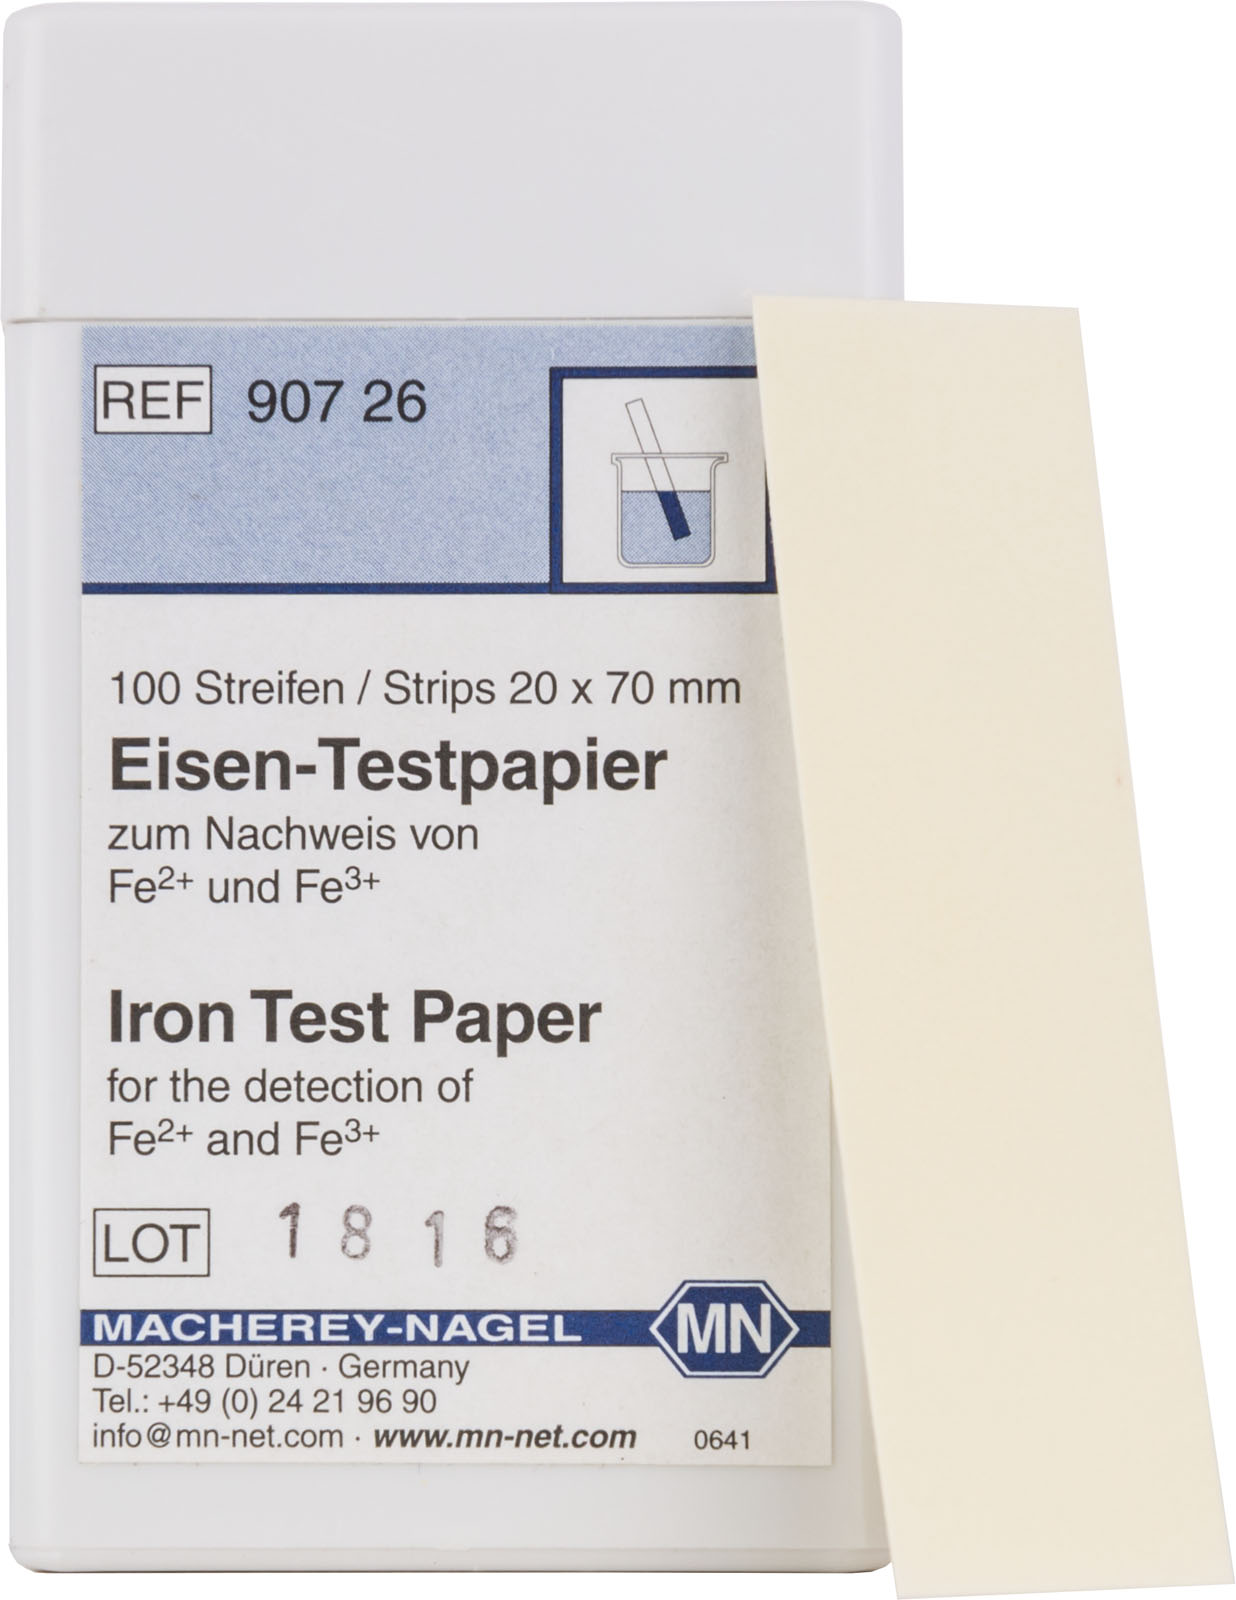 Iron Test Paper